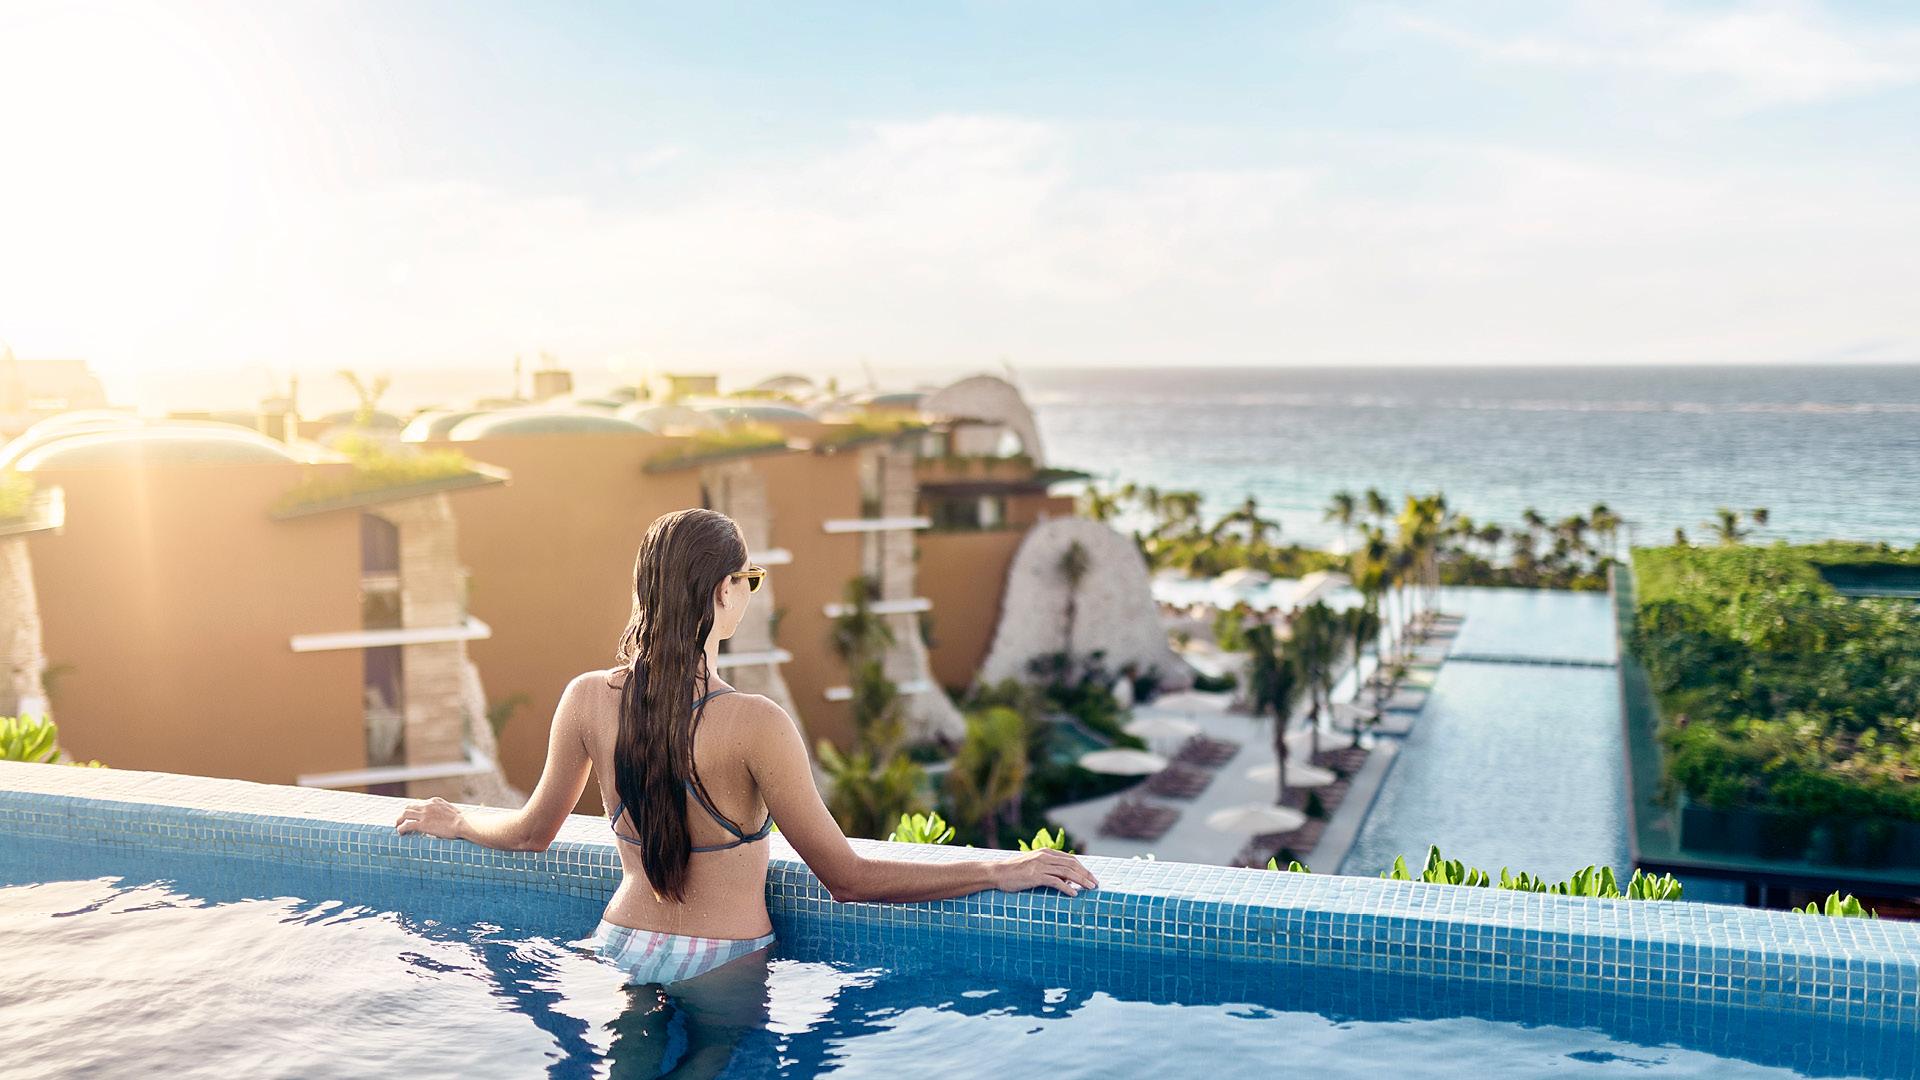 Woman standing in pool overlooking a Hoteles Xcaret resort